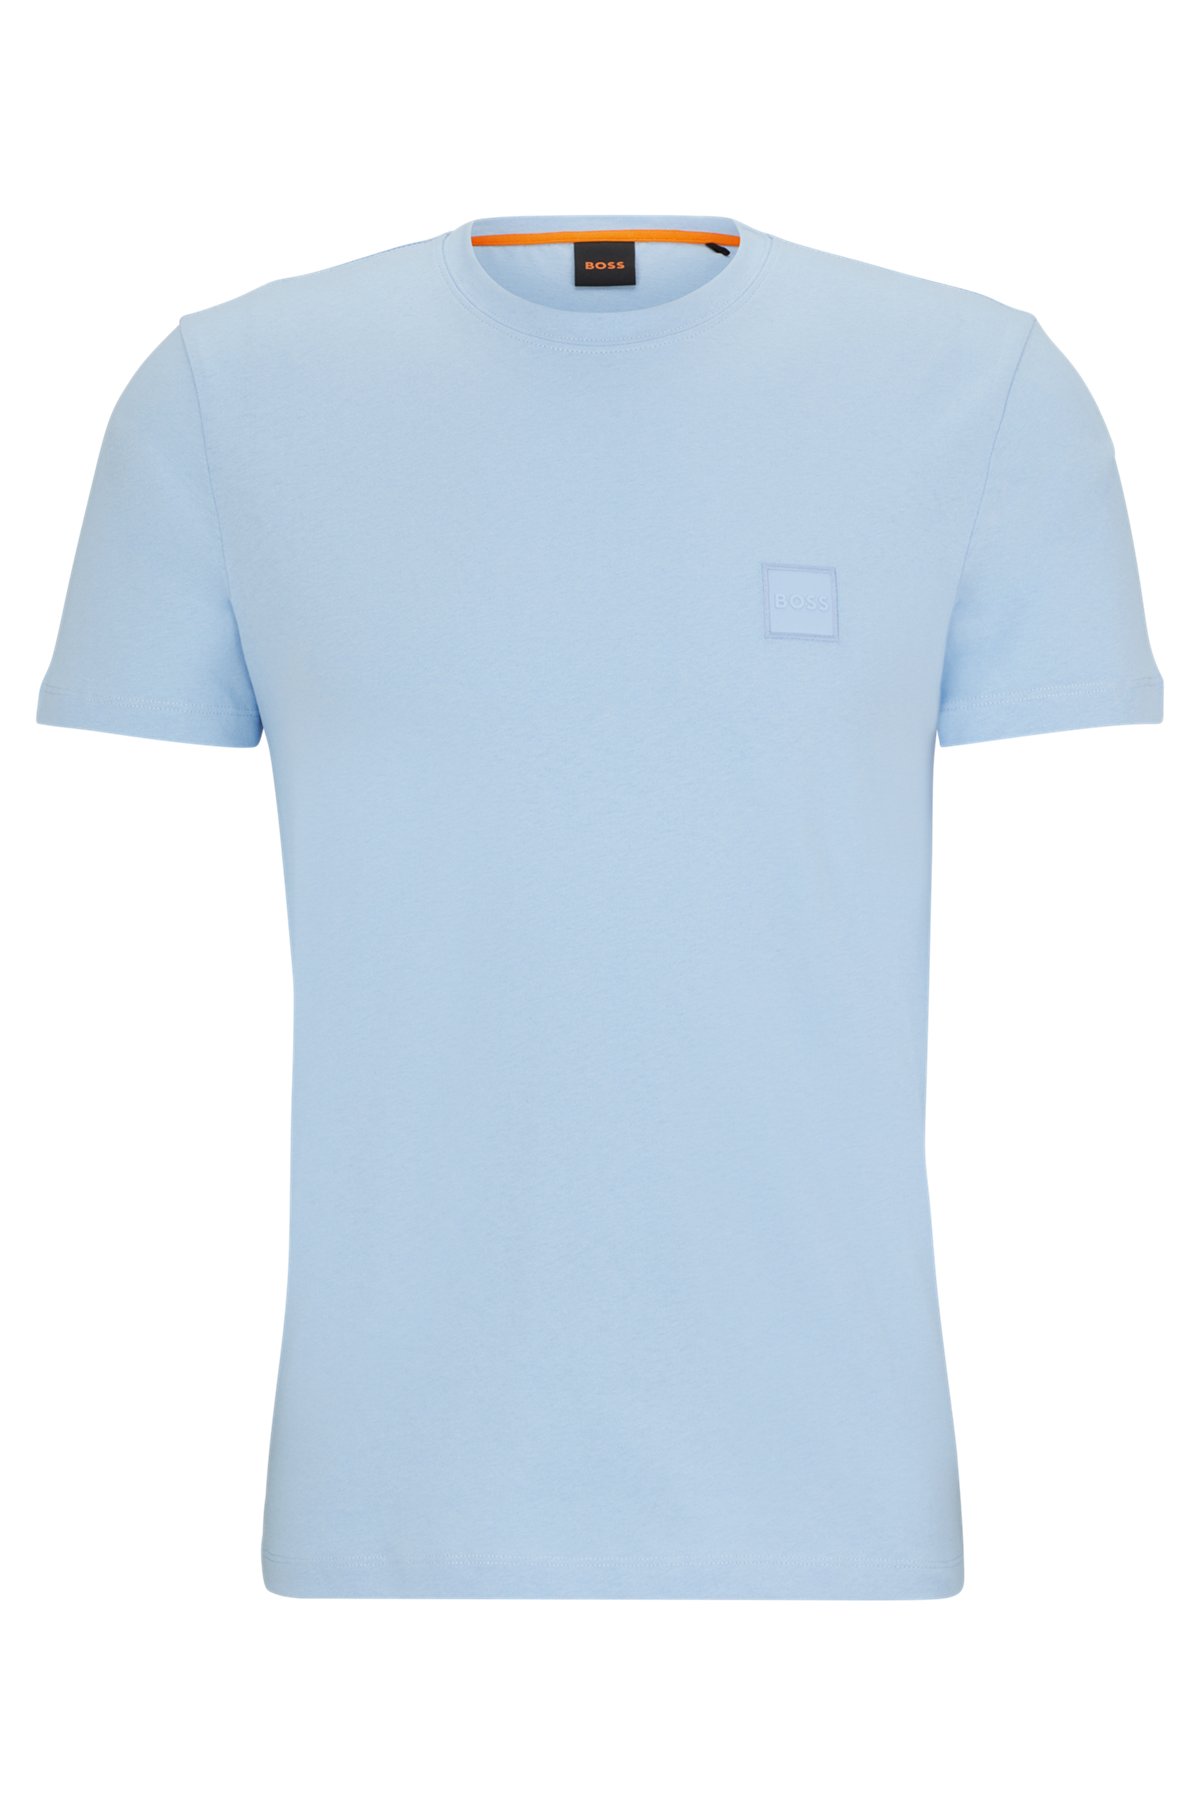 T-shirt Relaxed Fit en jersey de coton avec patch logo, bleu clair